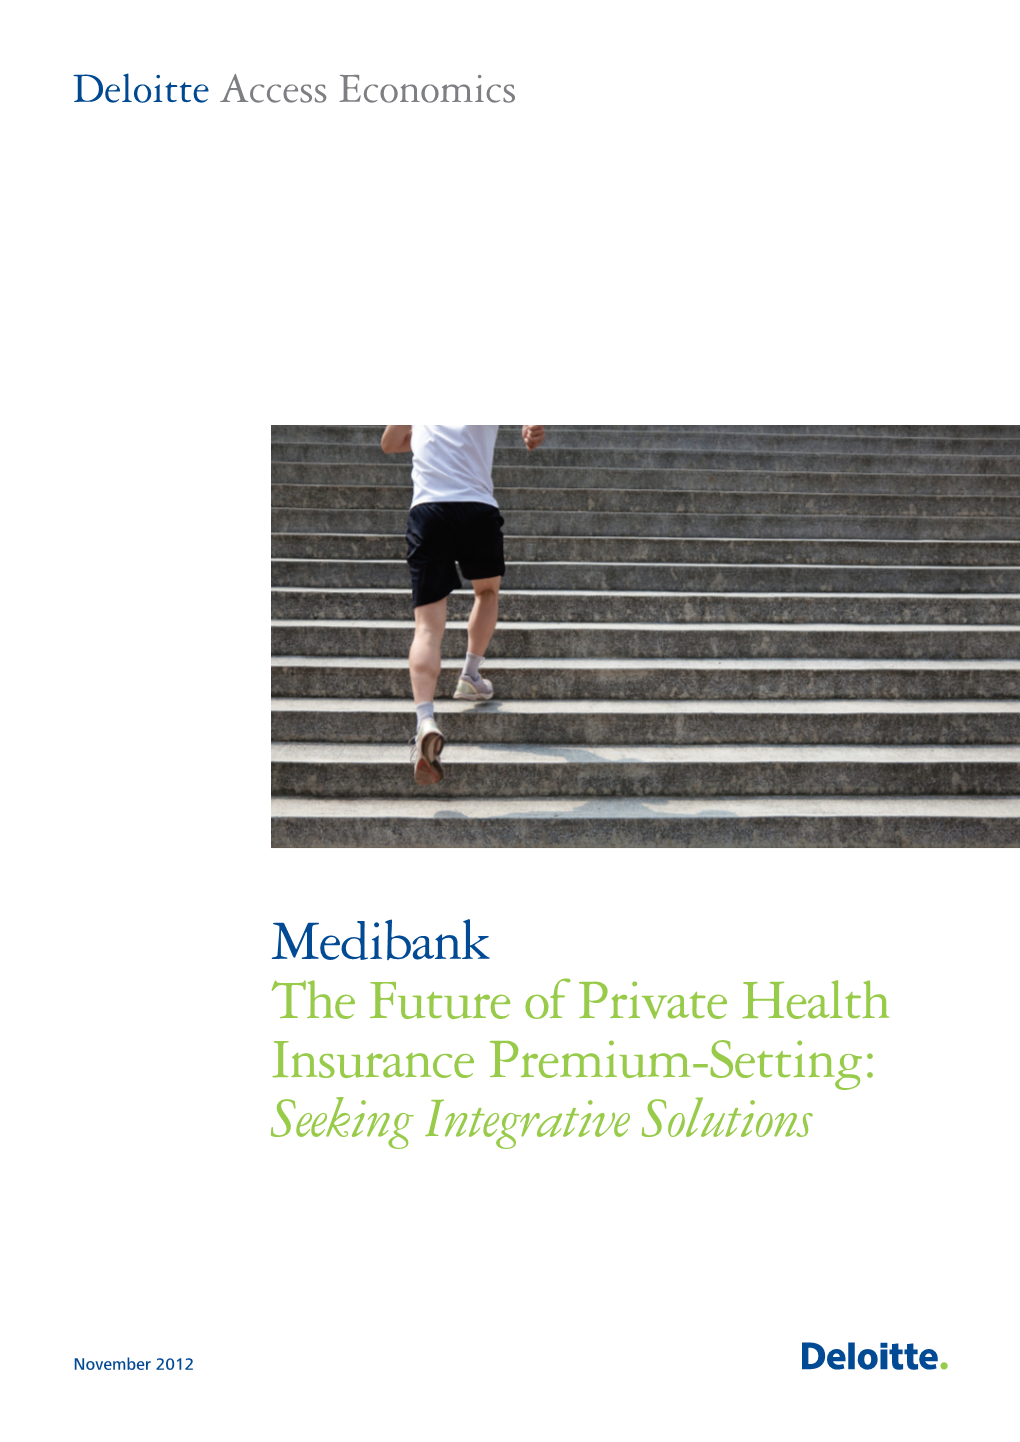 Medibank the Future of Private Health Insurance Premium-Setting: Seeking Integrative Solutions